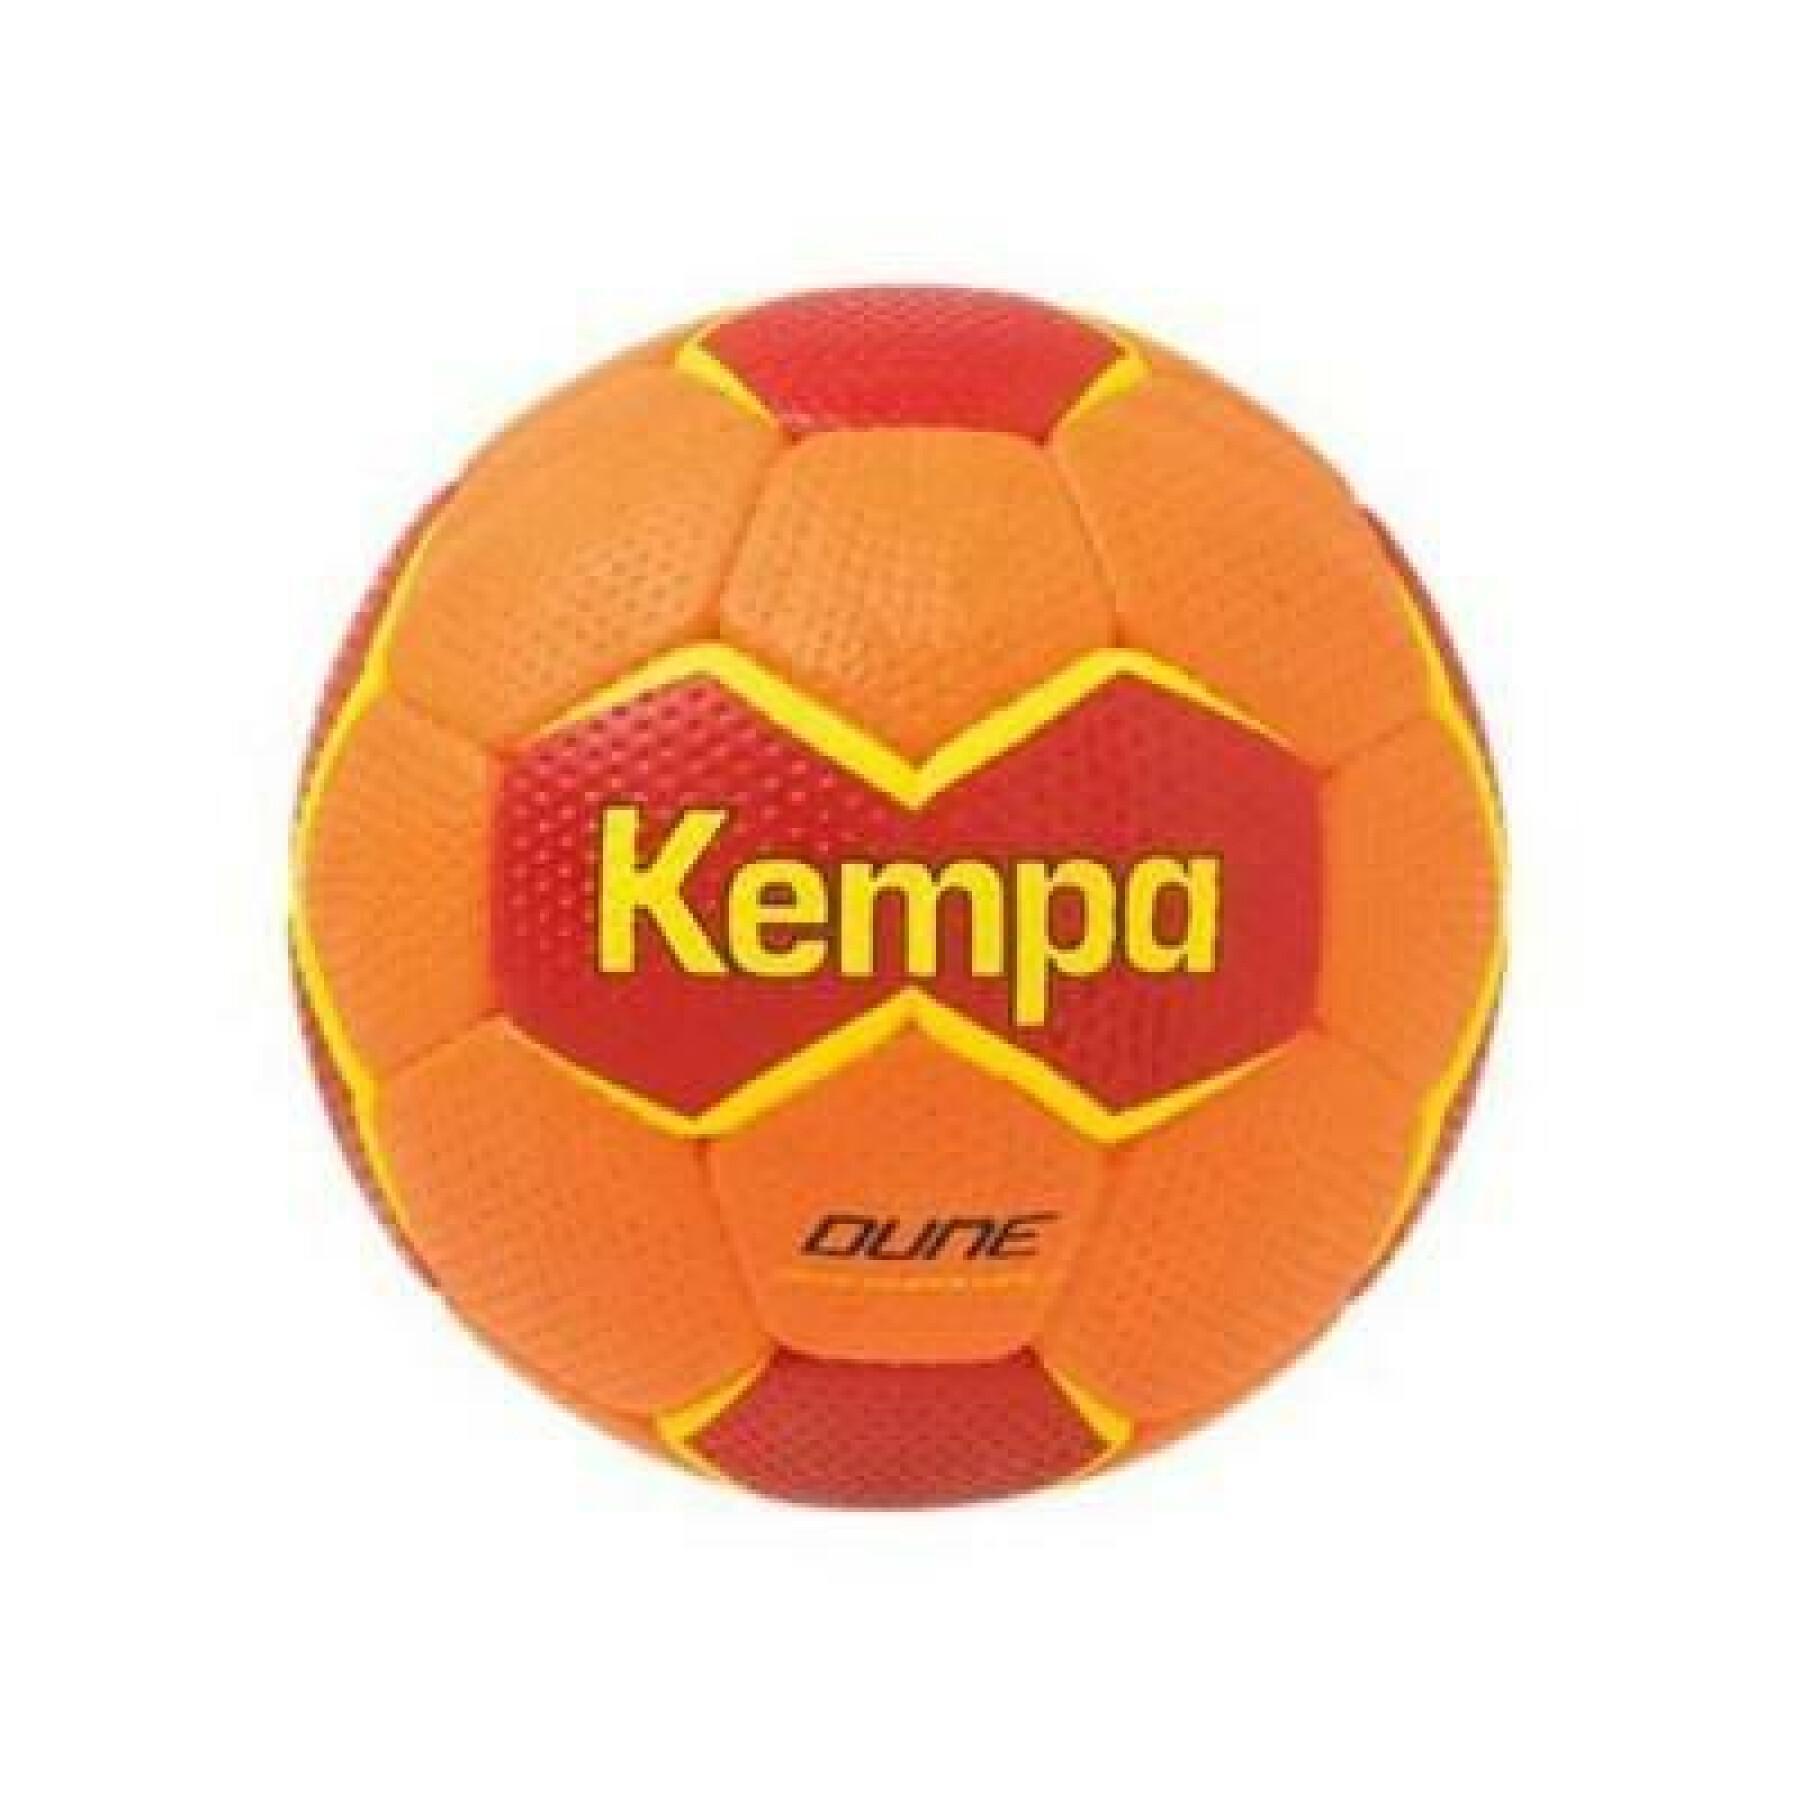 Balon Kempa Dune Beachball T3 orange/rouge